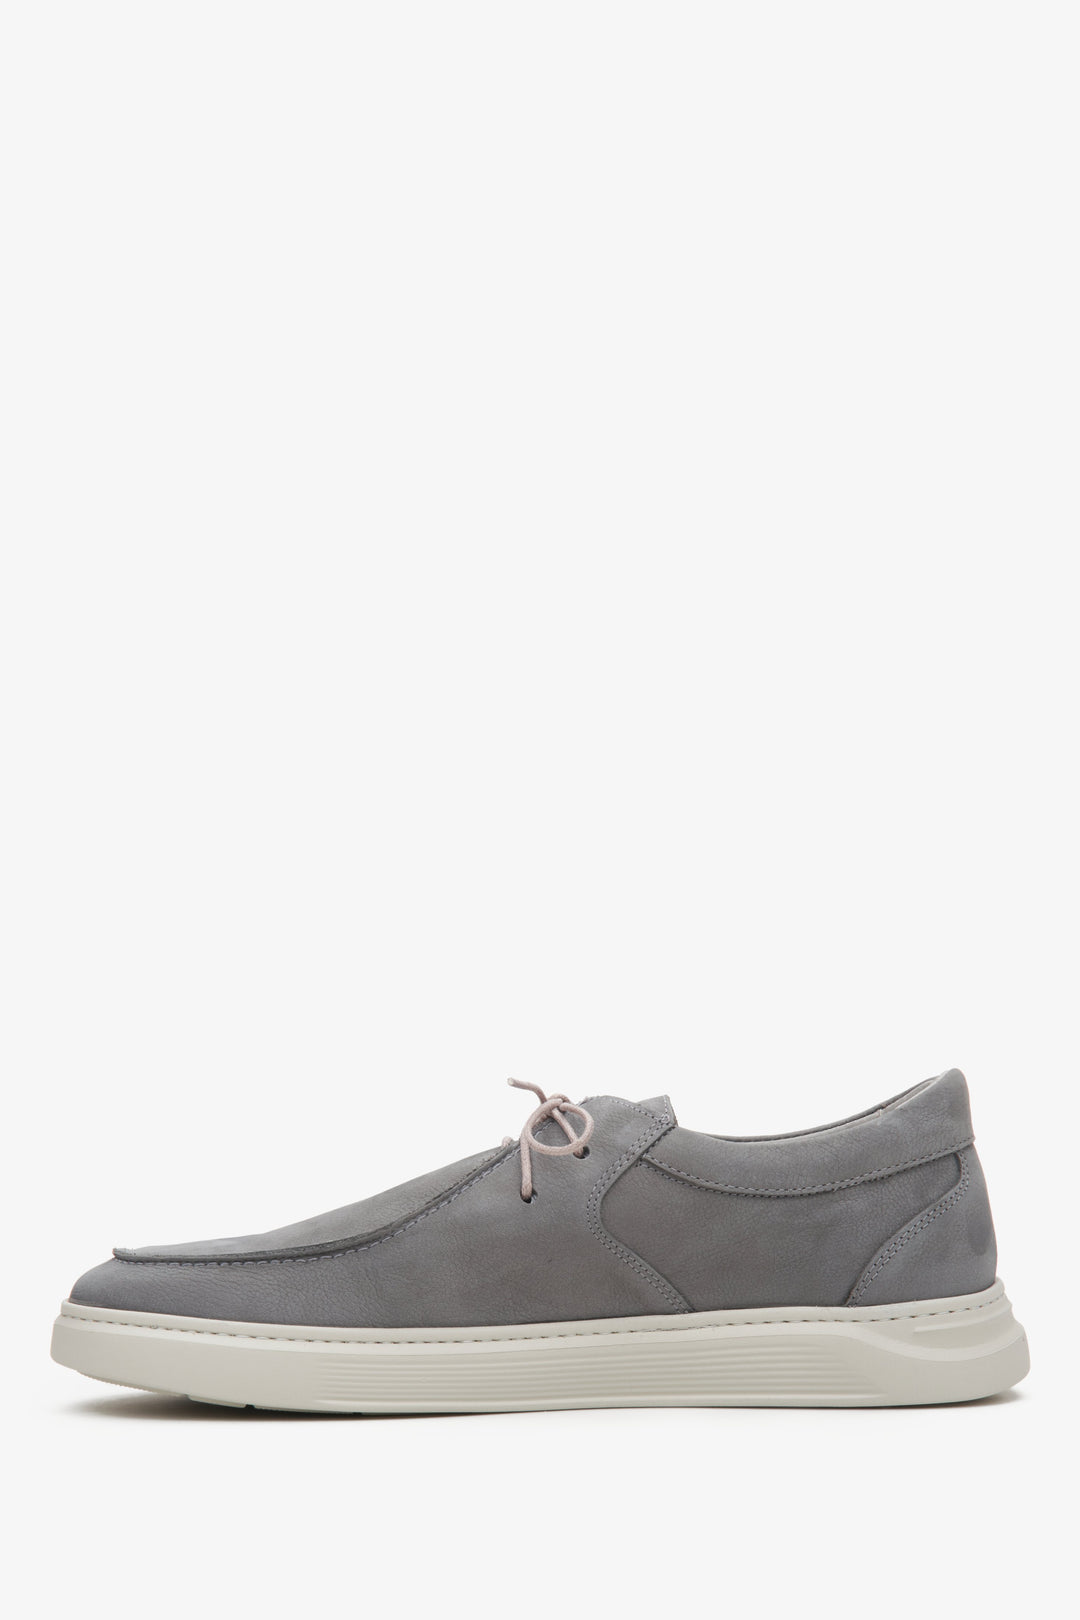 Estro grey soft velour men's loafers - side profile of the shoe.